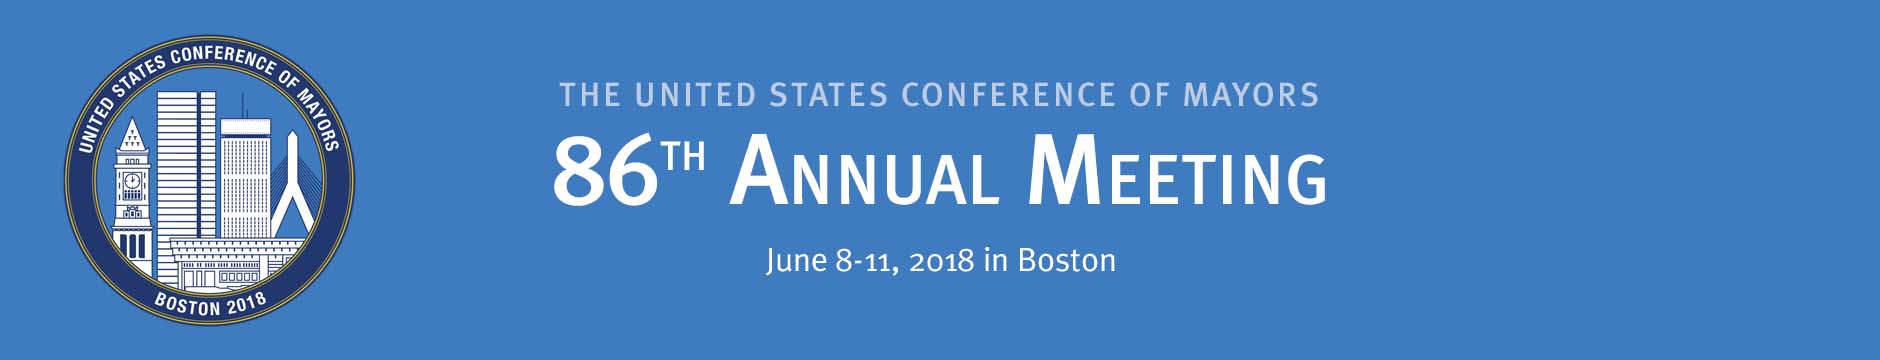 86th Annual Meeting: June 8-11, 2018 in Boston